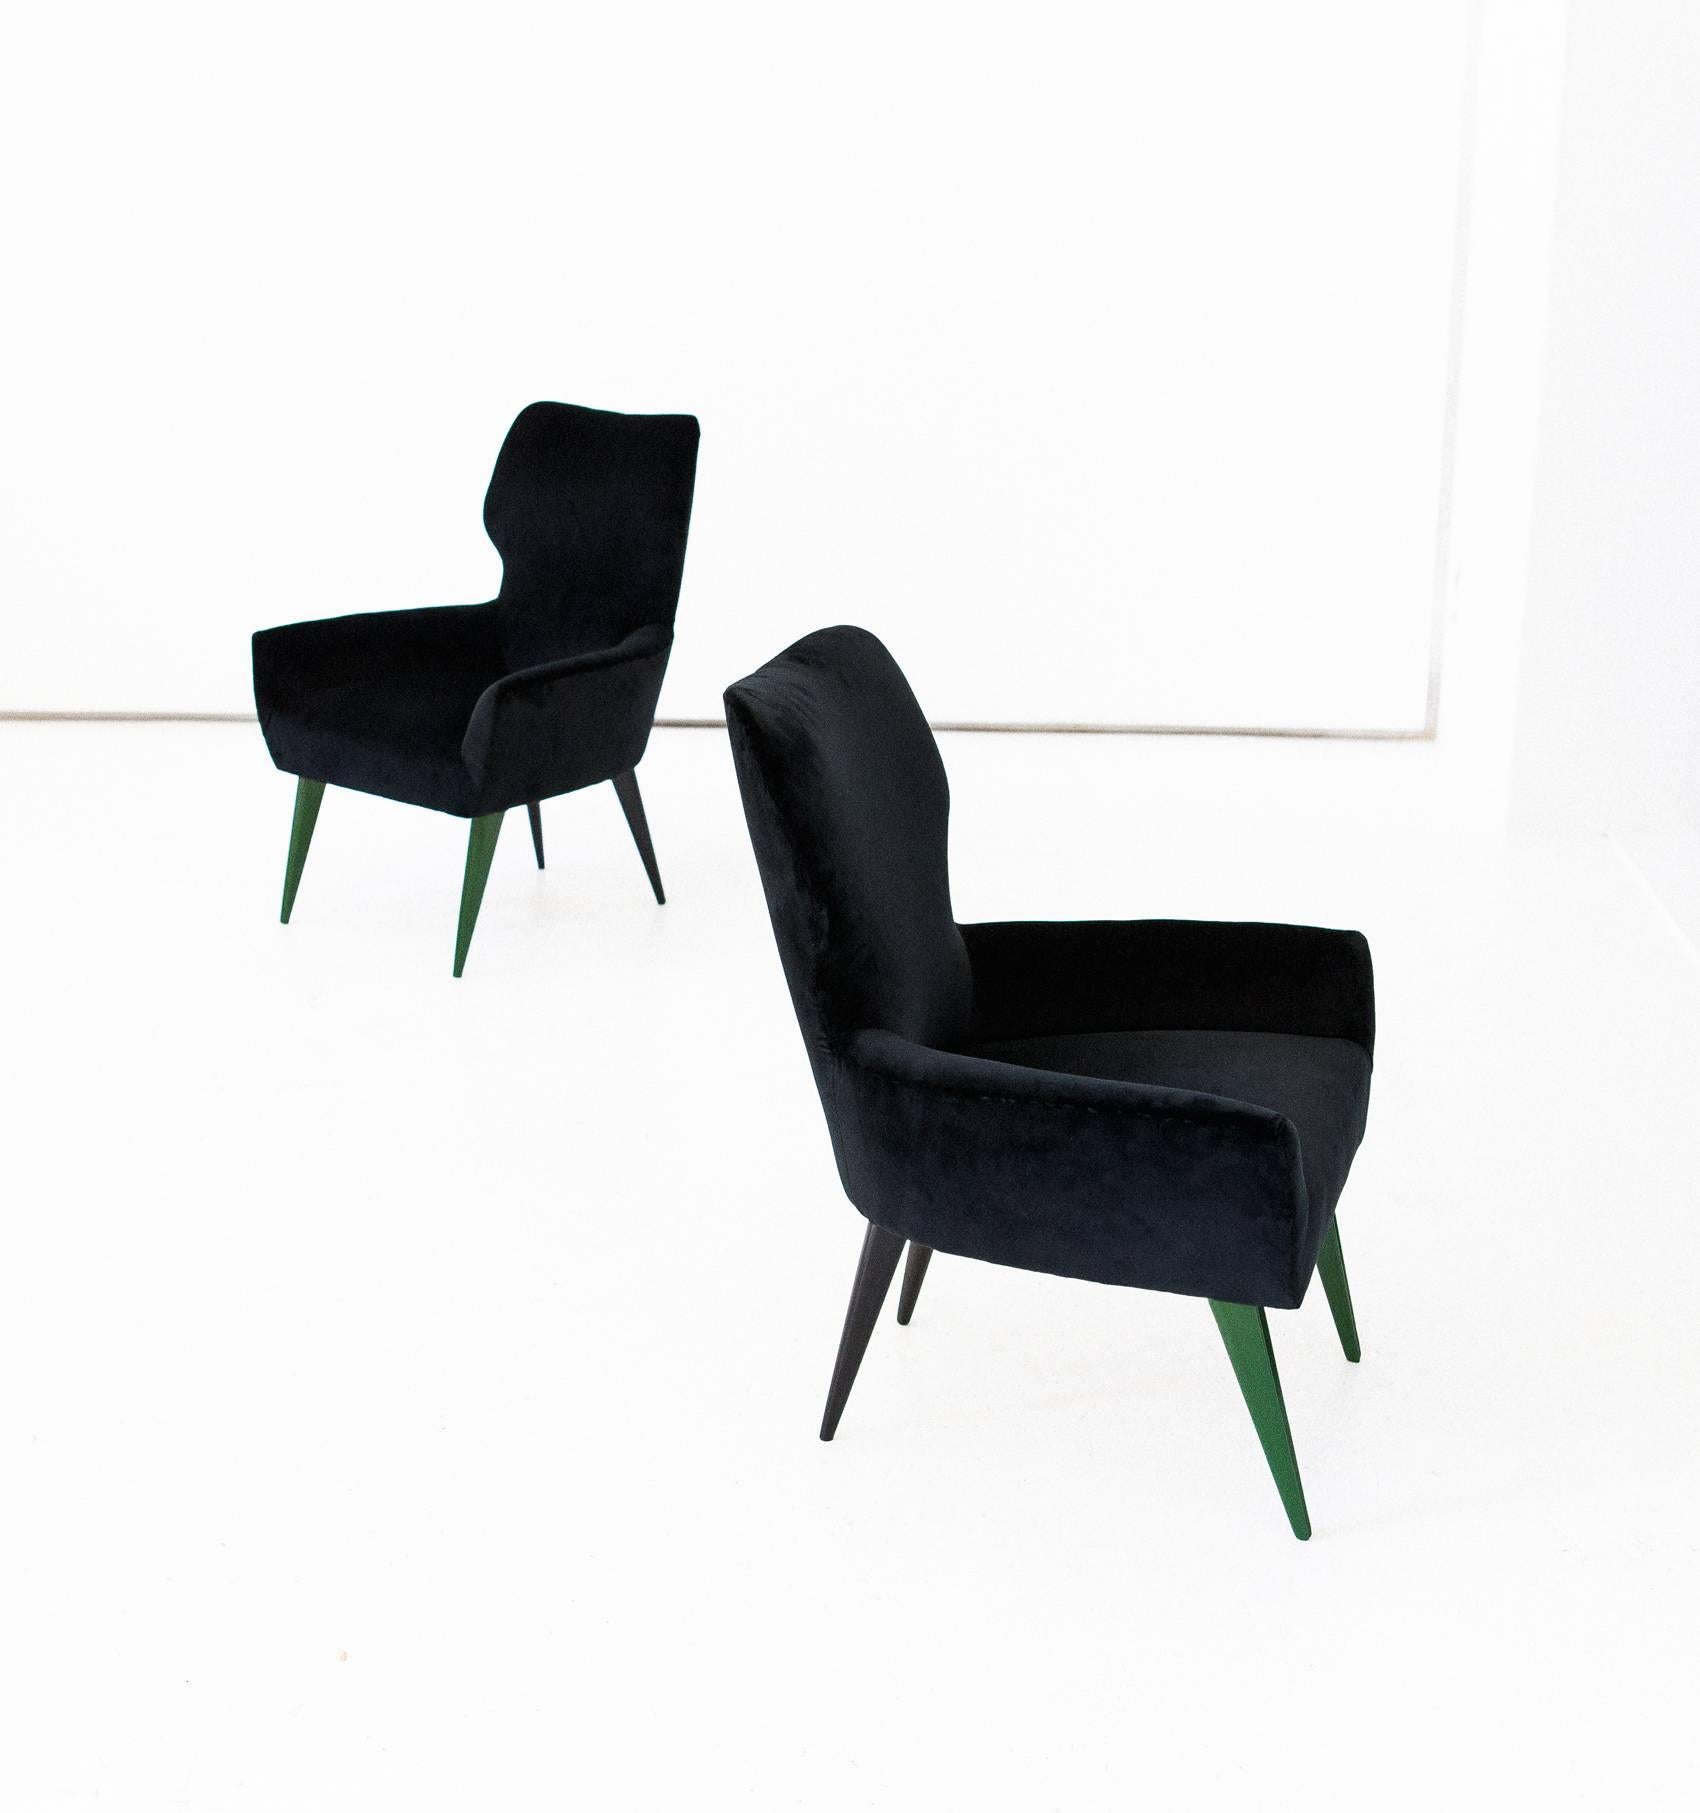 Mid-20th Century Pair of Italian Modern Easy Chairs with New Black Velvet Upholstery, 1950s